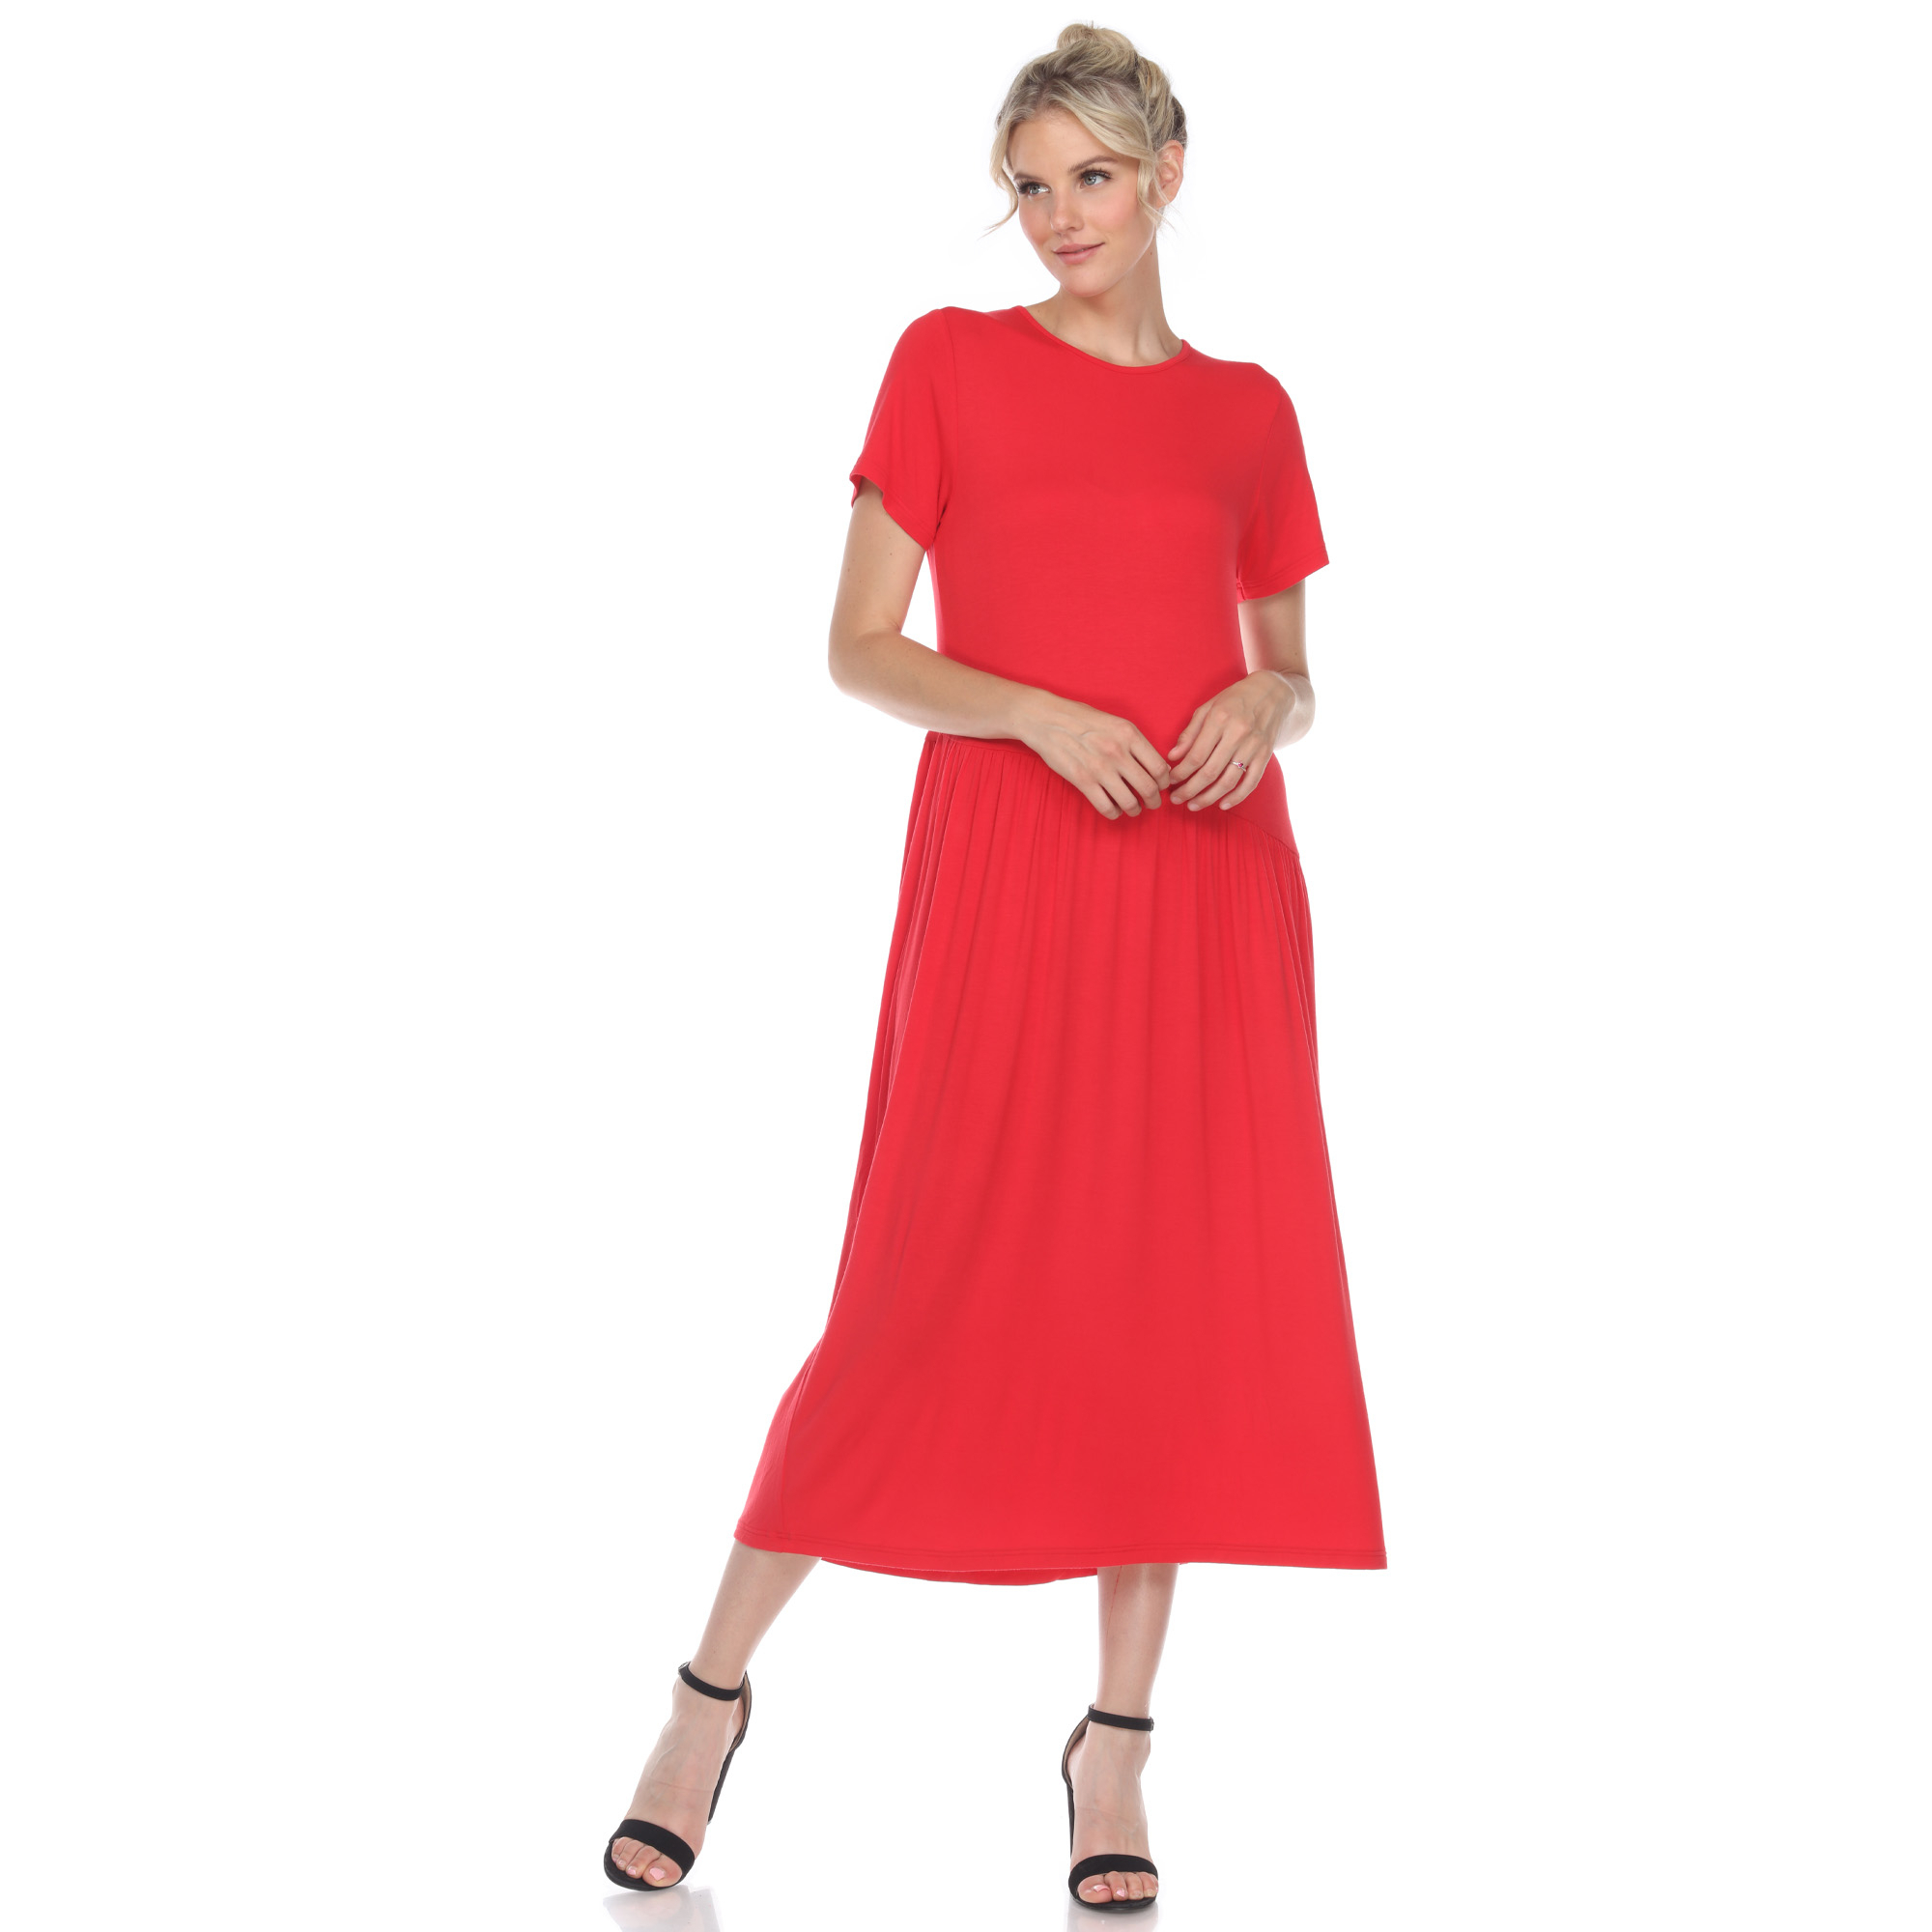 White Mark Womenâs Short Sleeve Maxi Dress - Red, 3X